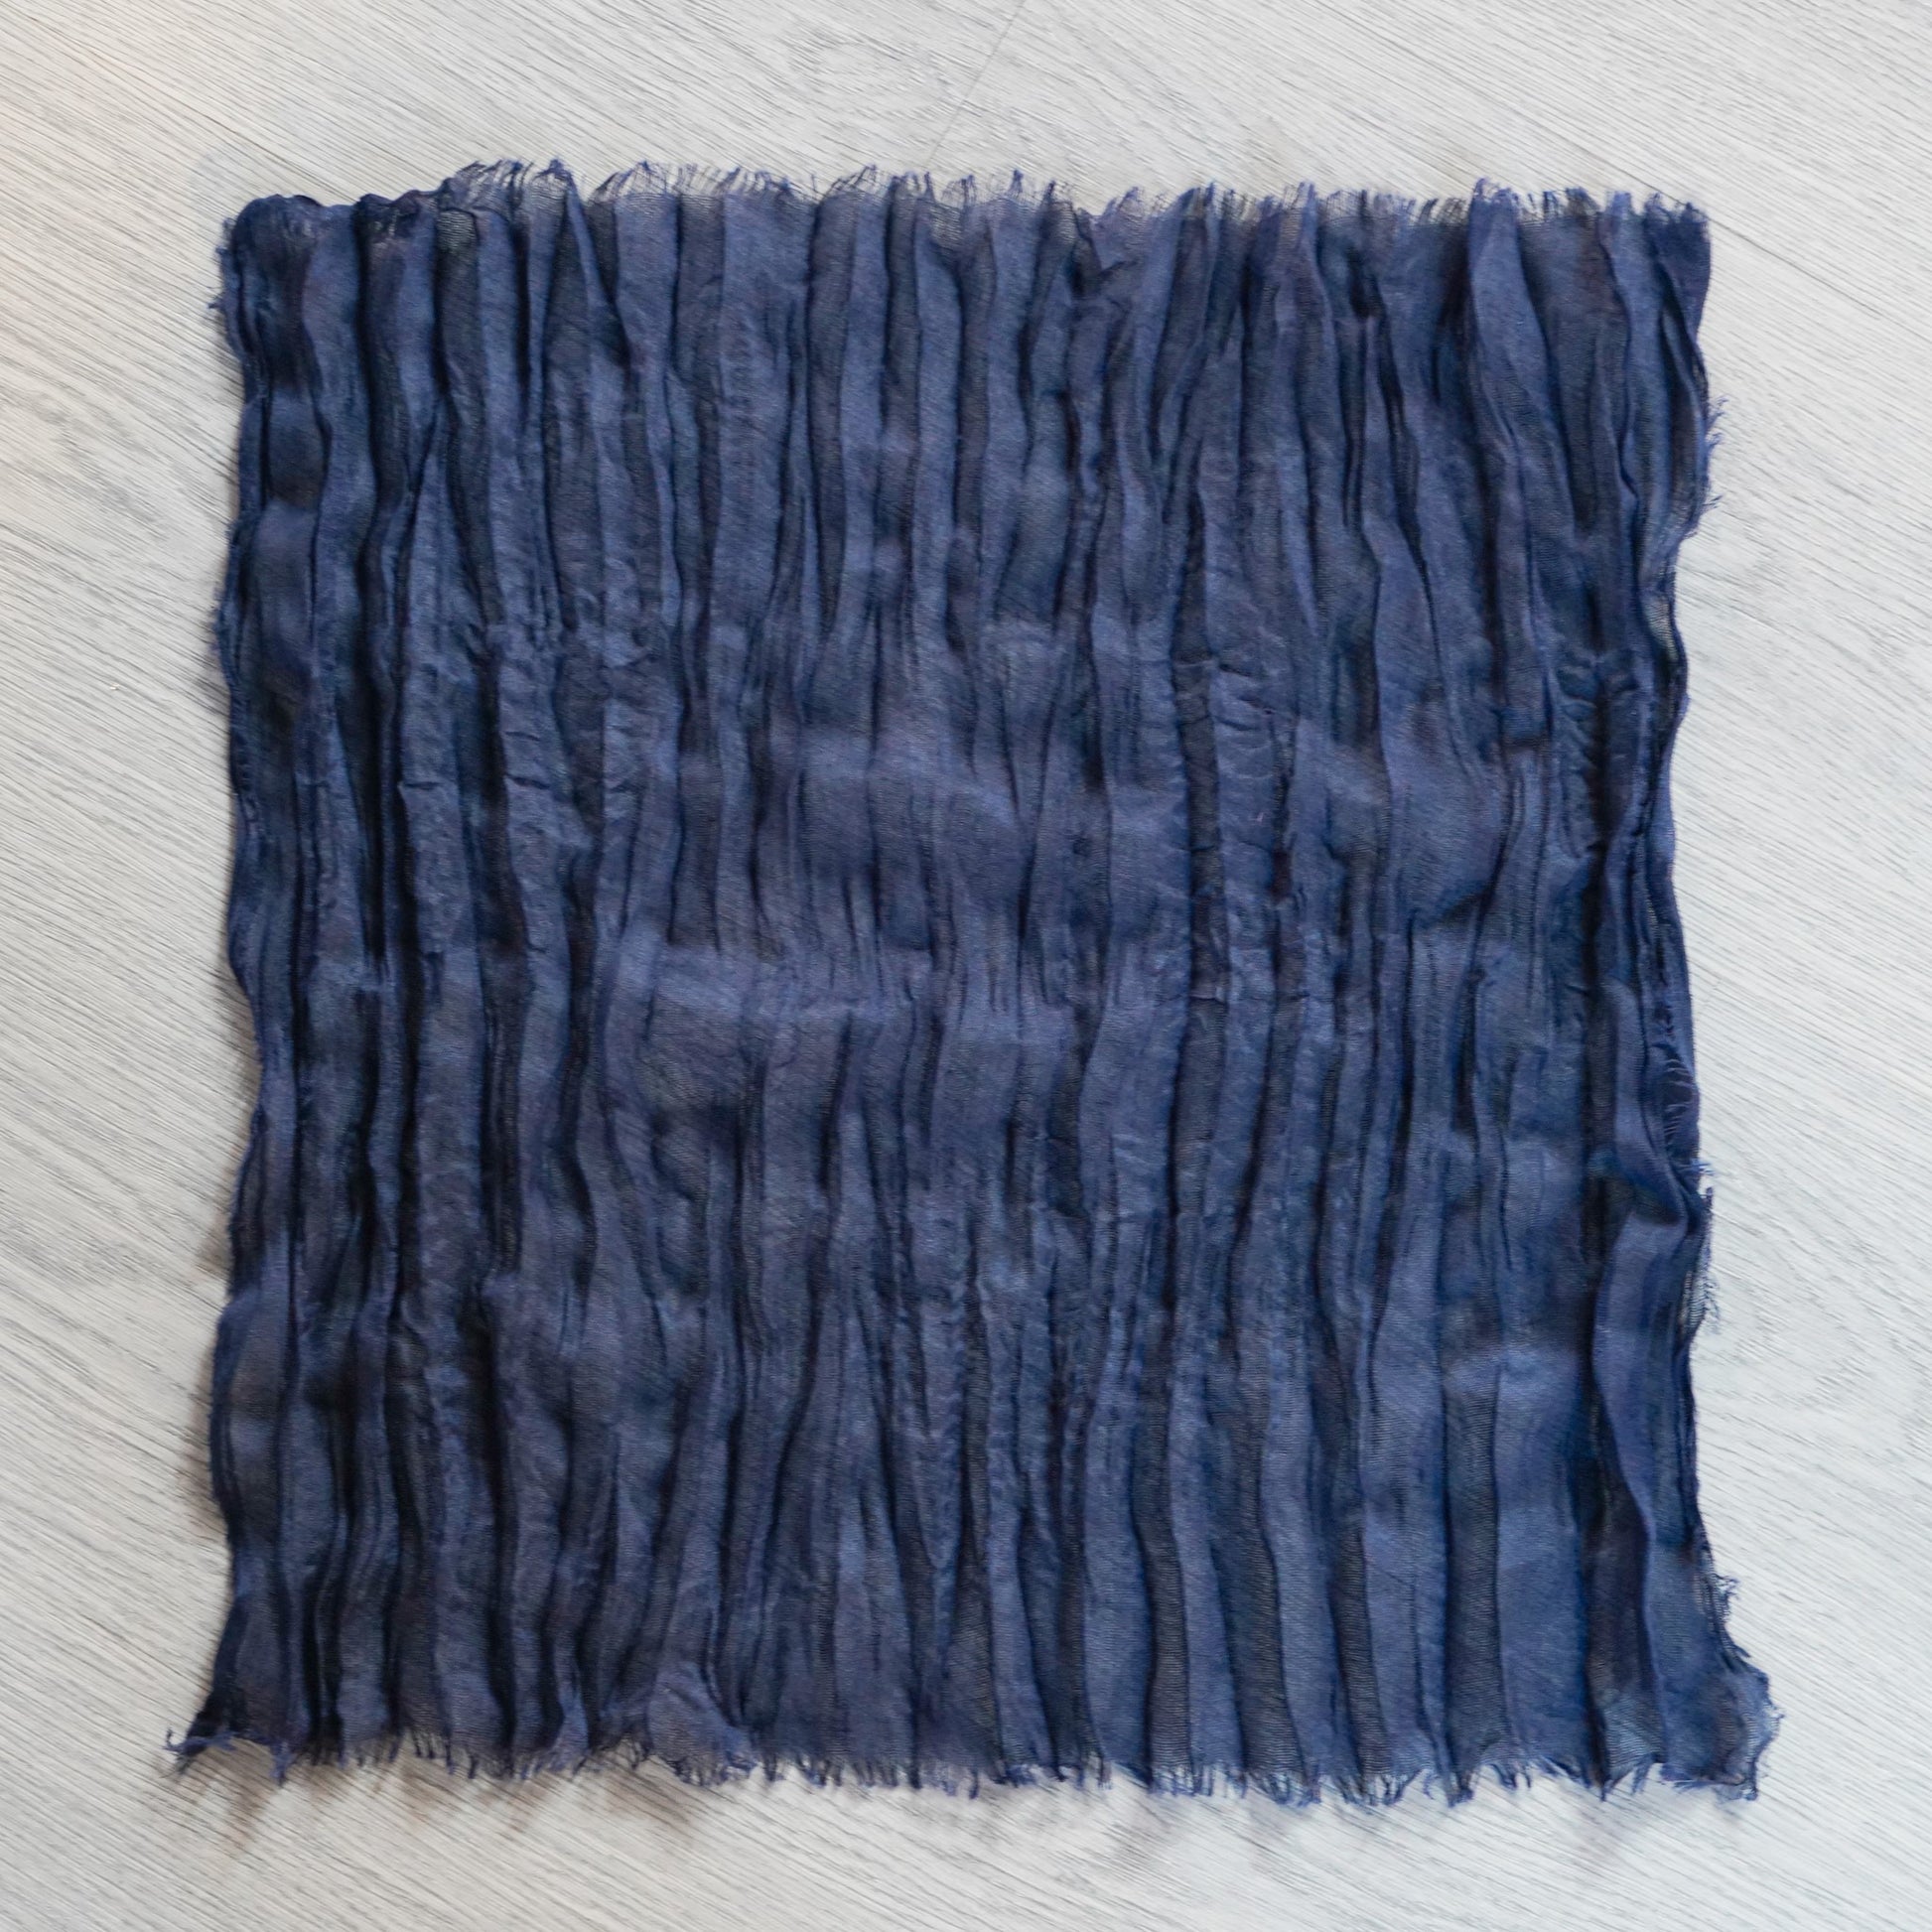 Cheesecloth Gauze Linen Napkin 20"x20" (5pc/pk) - Navy Blue